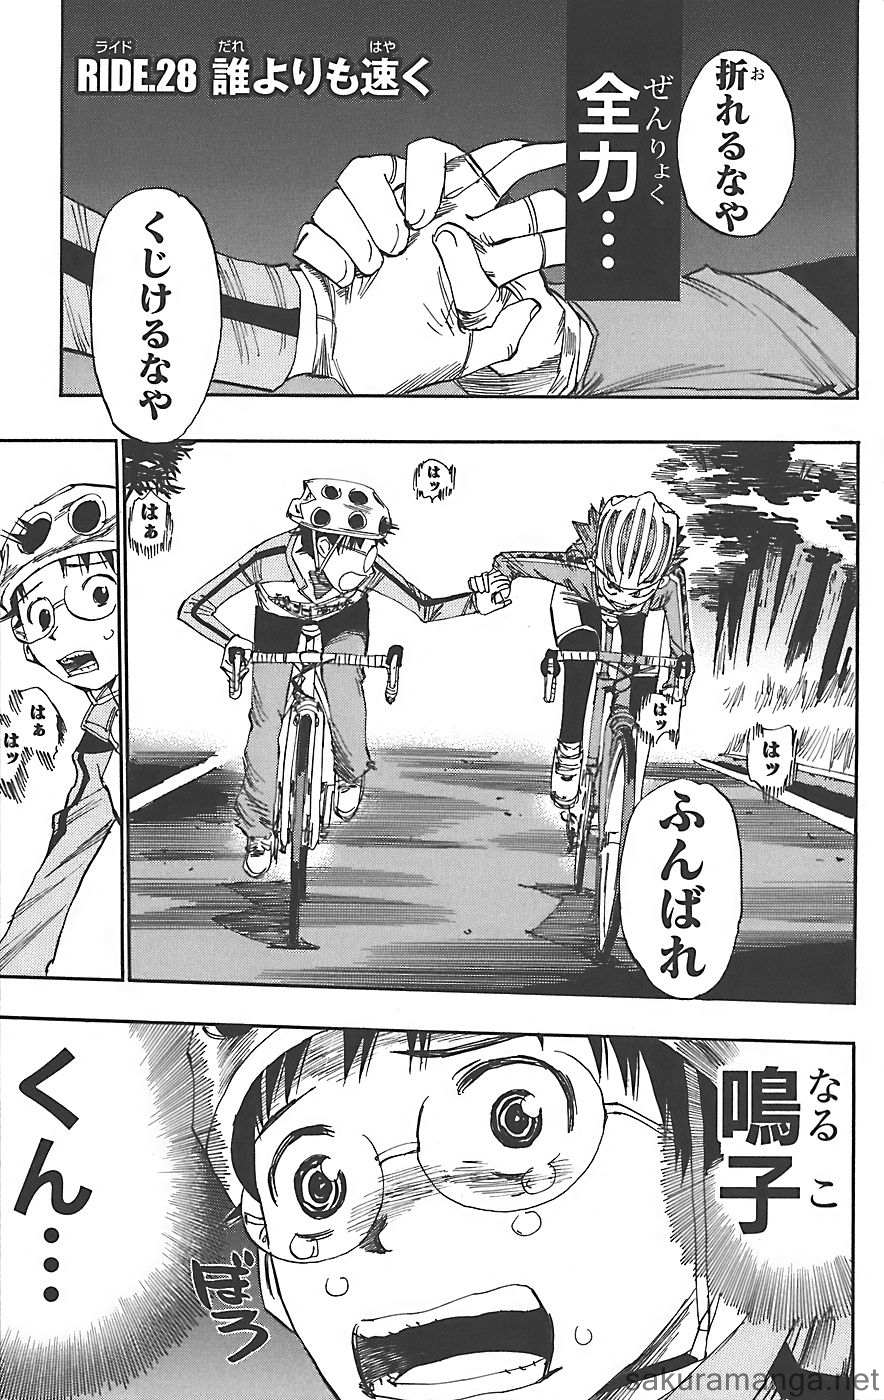 Yowamushi Pedal 弱虫ペダル Chap 28 Sakura Manga マンガの日本語